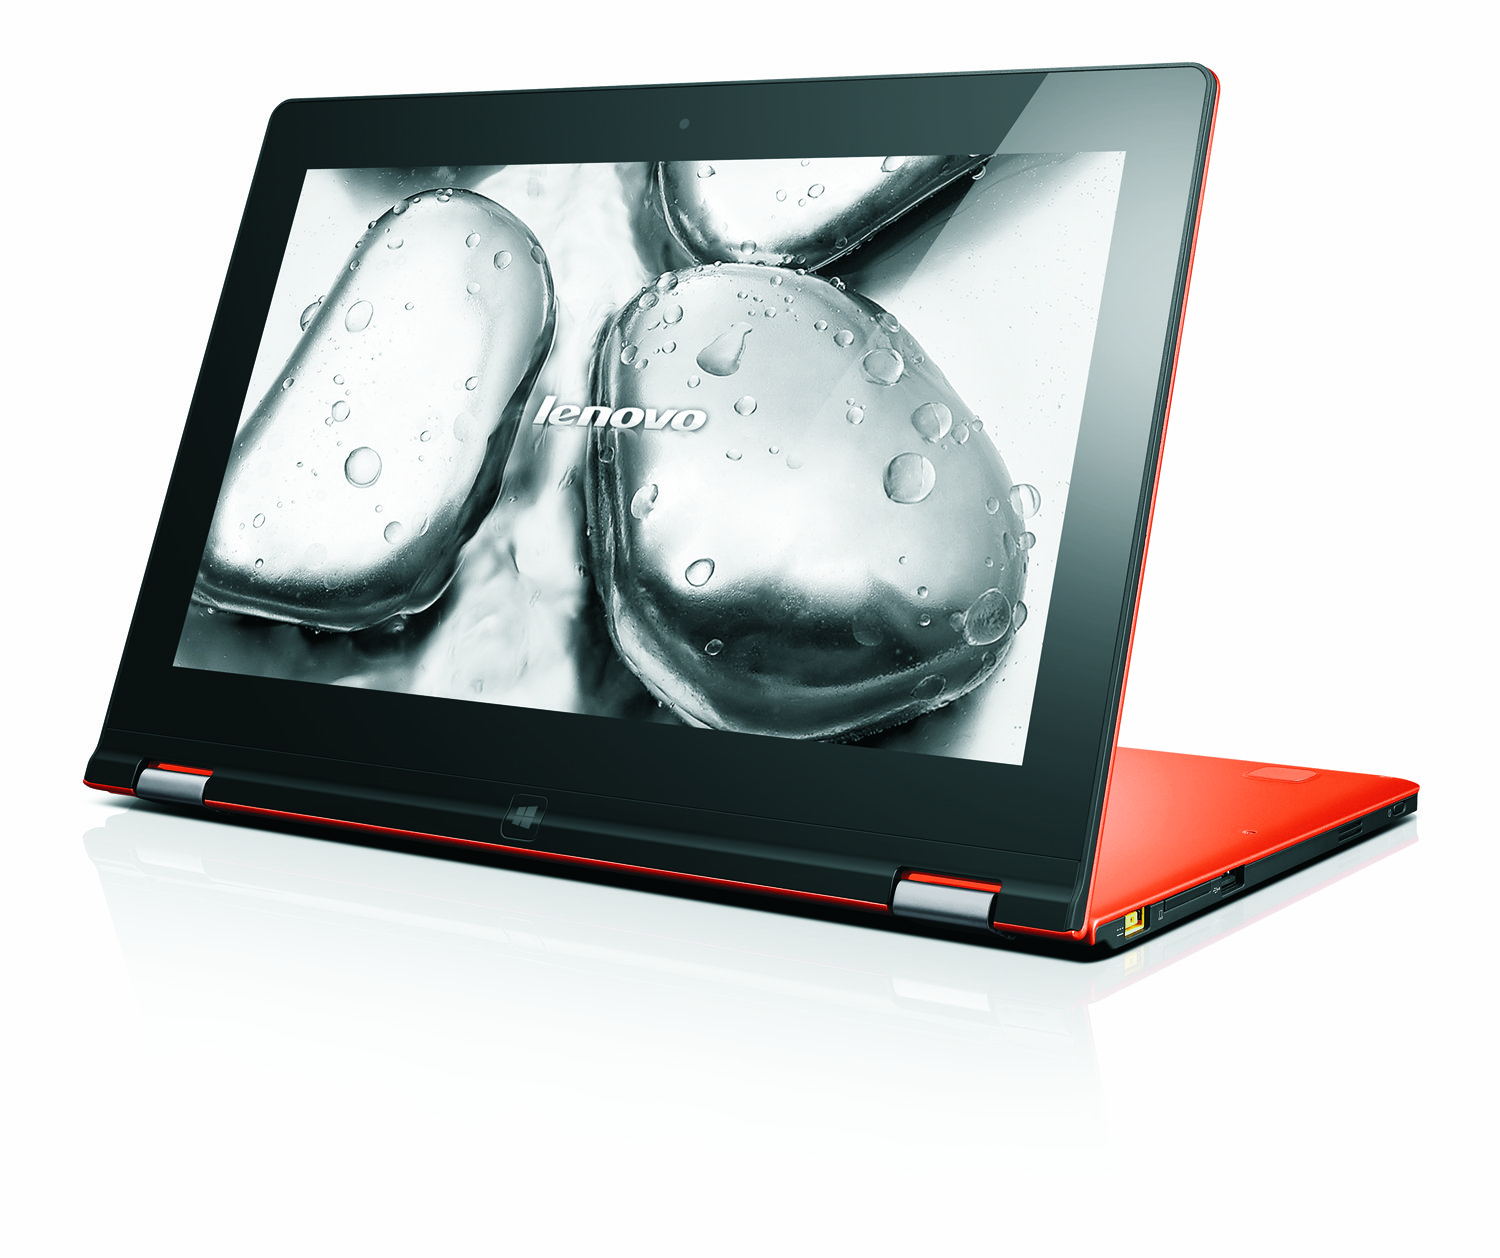 Lenovo Thinkpad Helix And Ideapad Yoga 11s Revealed To Flip For